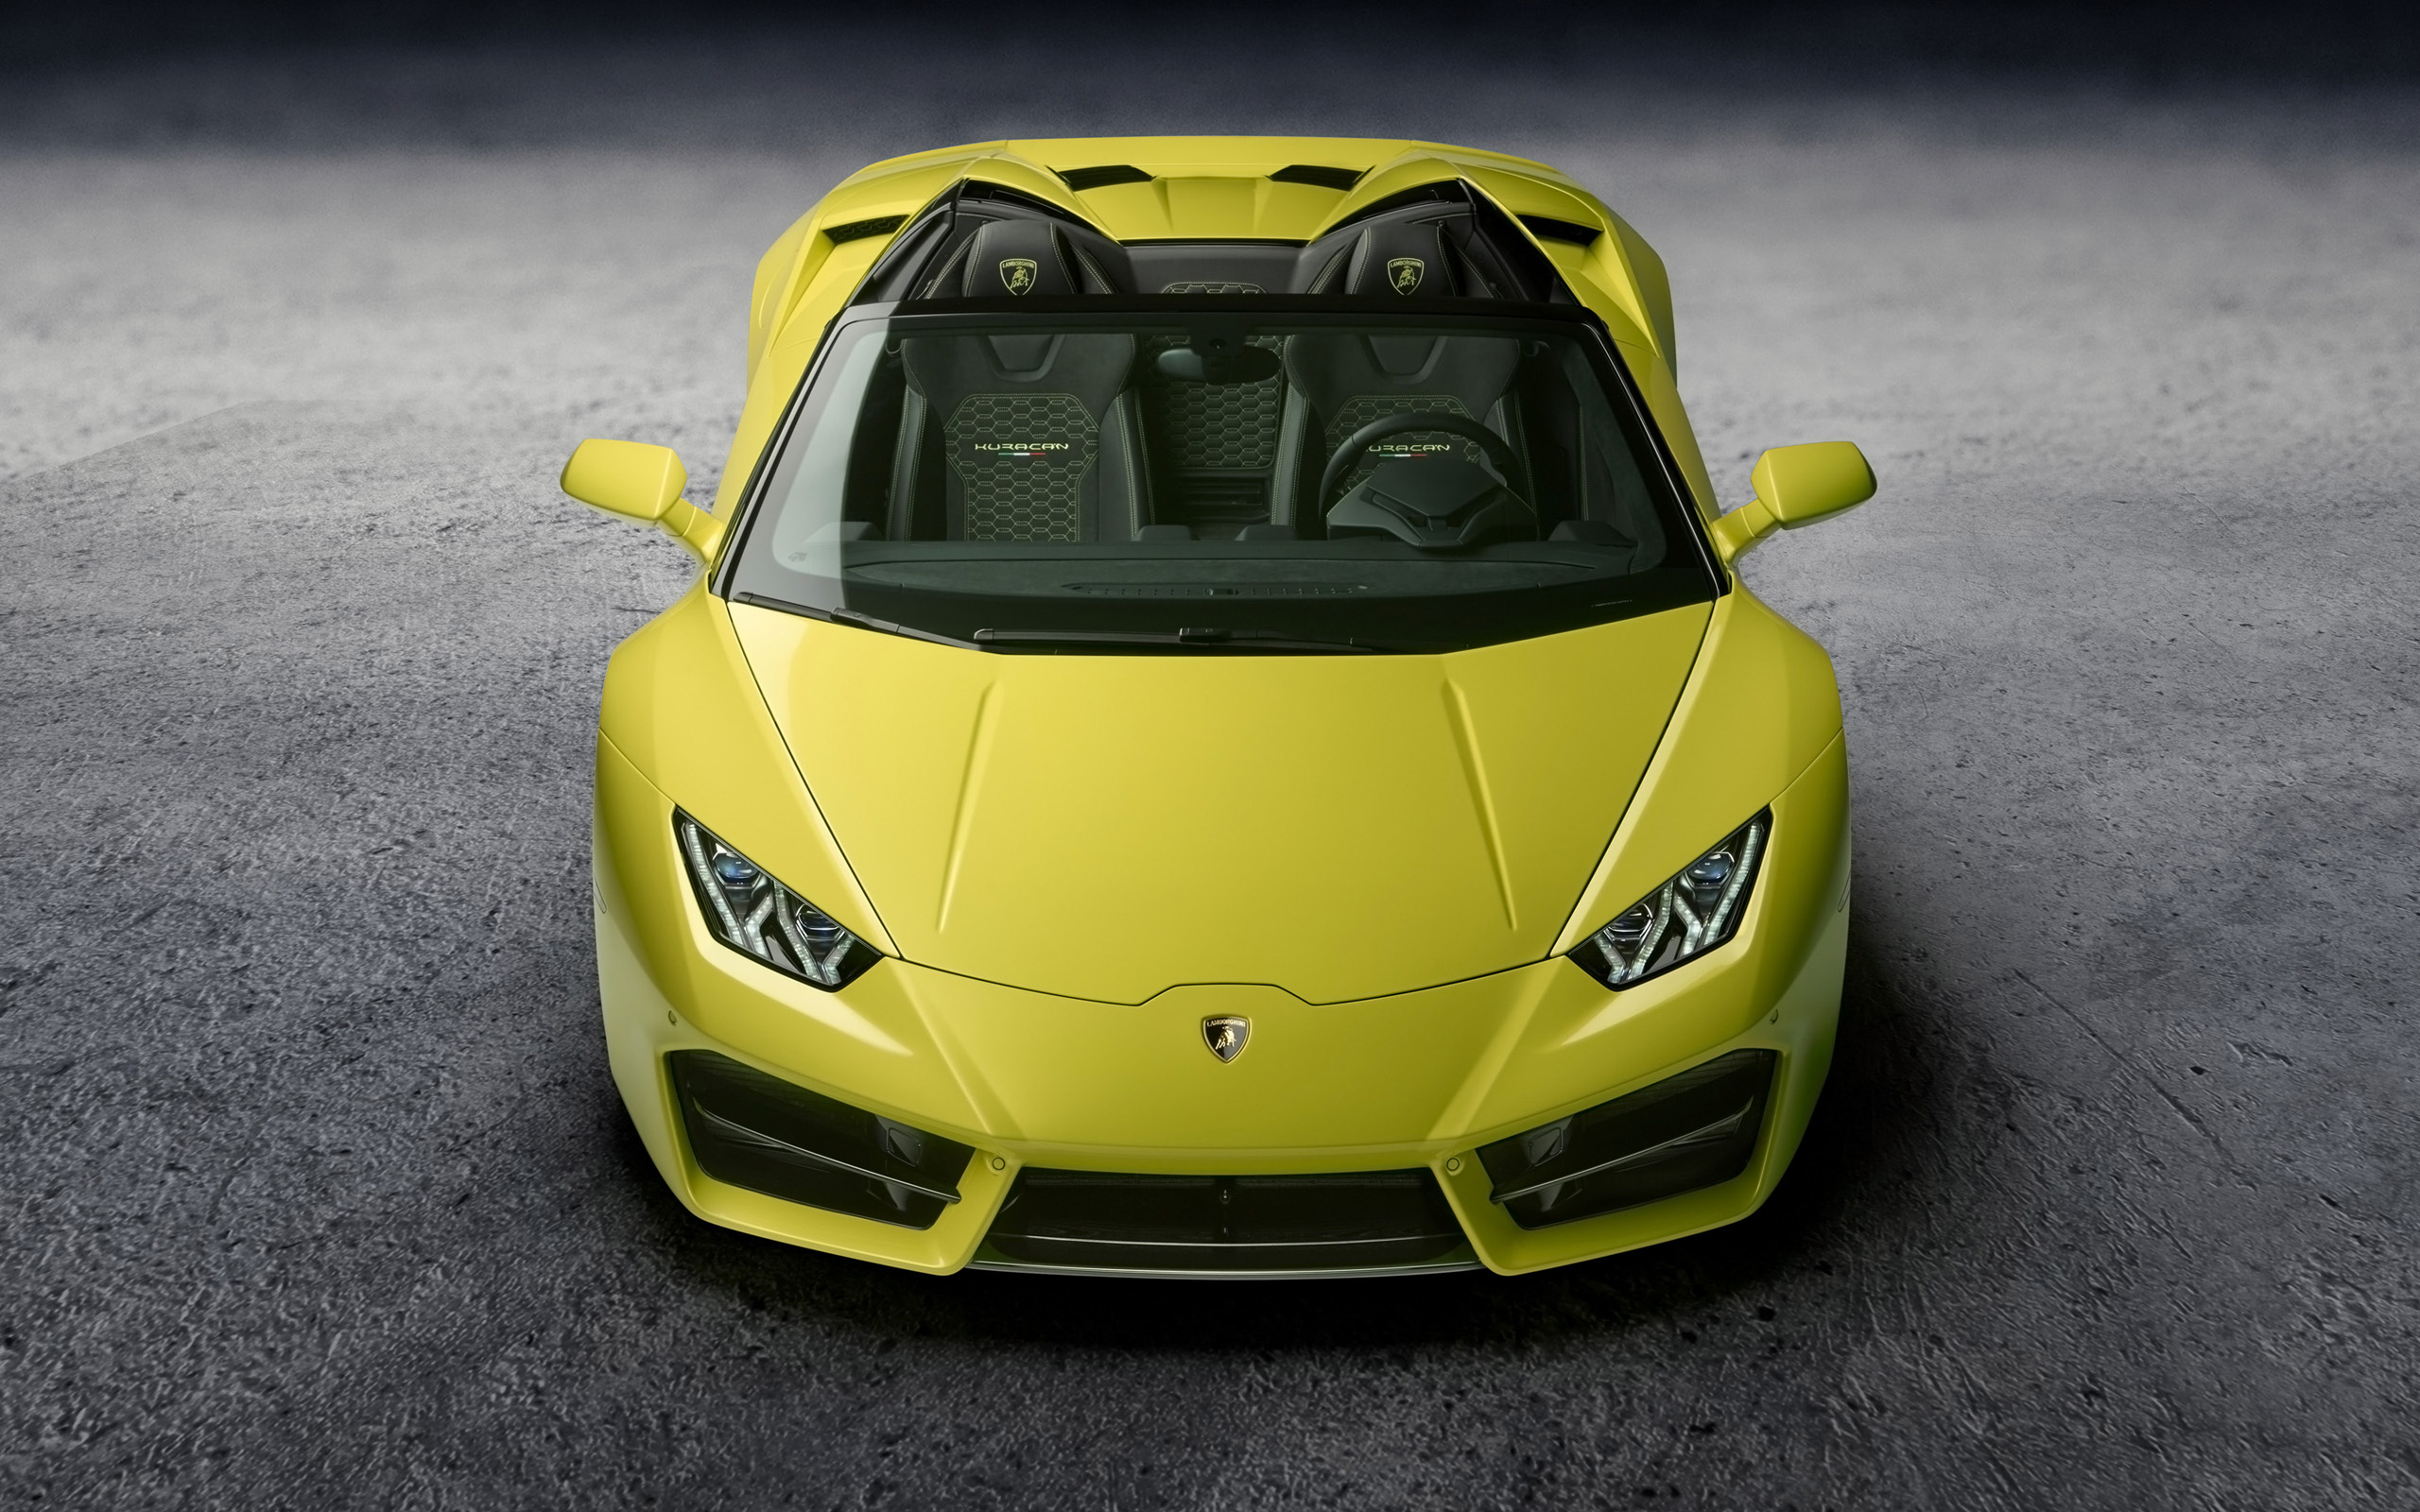 Télécharger des fonds d'écran Lamborghini Huracán Rwd Spyder HD